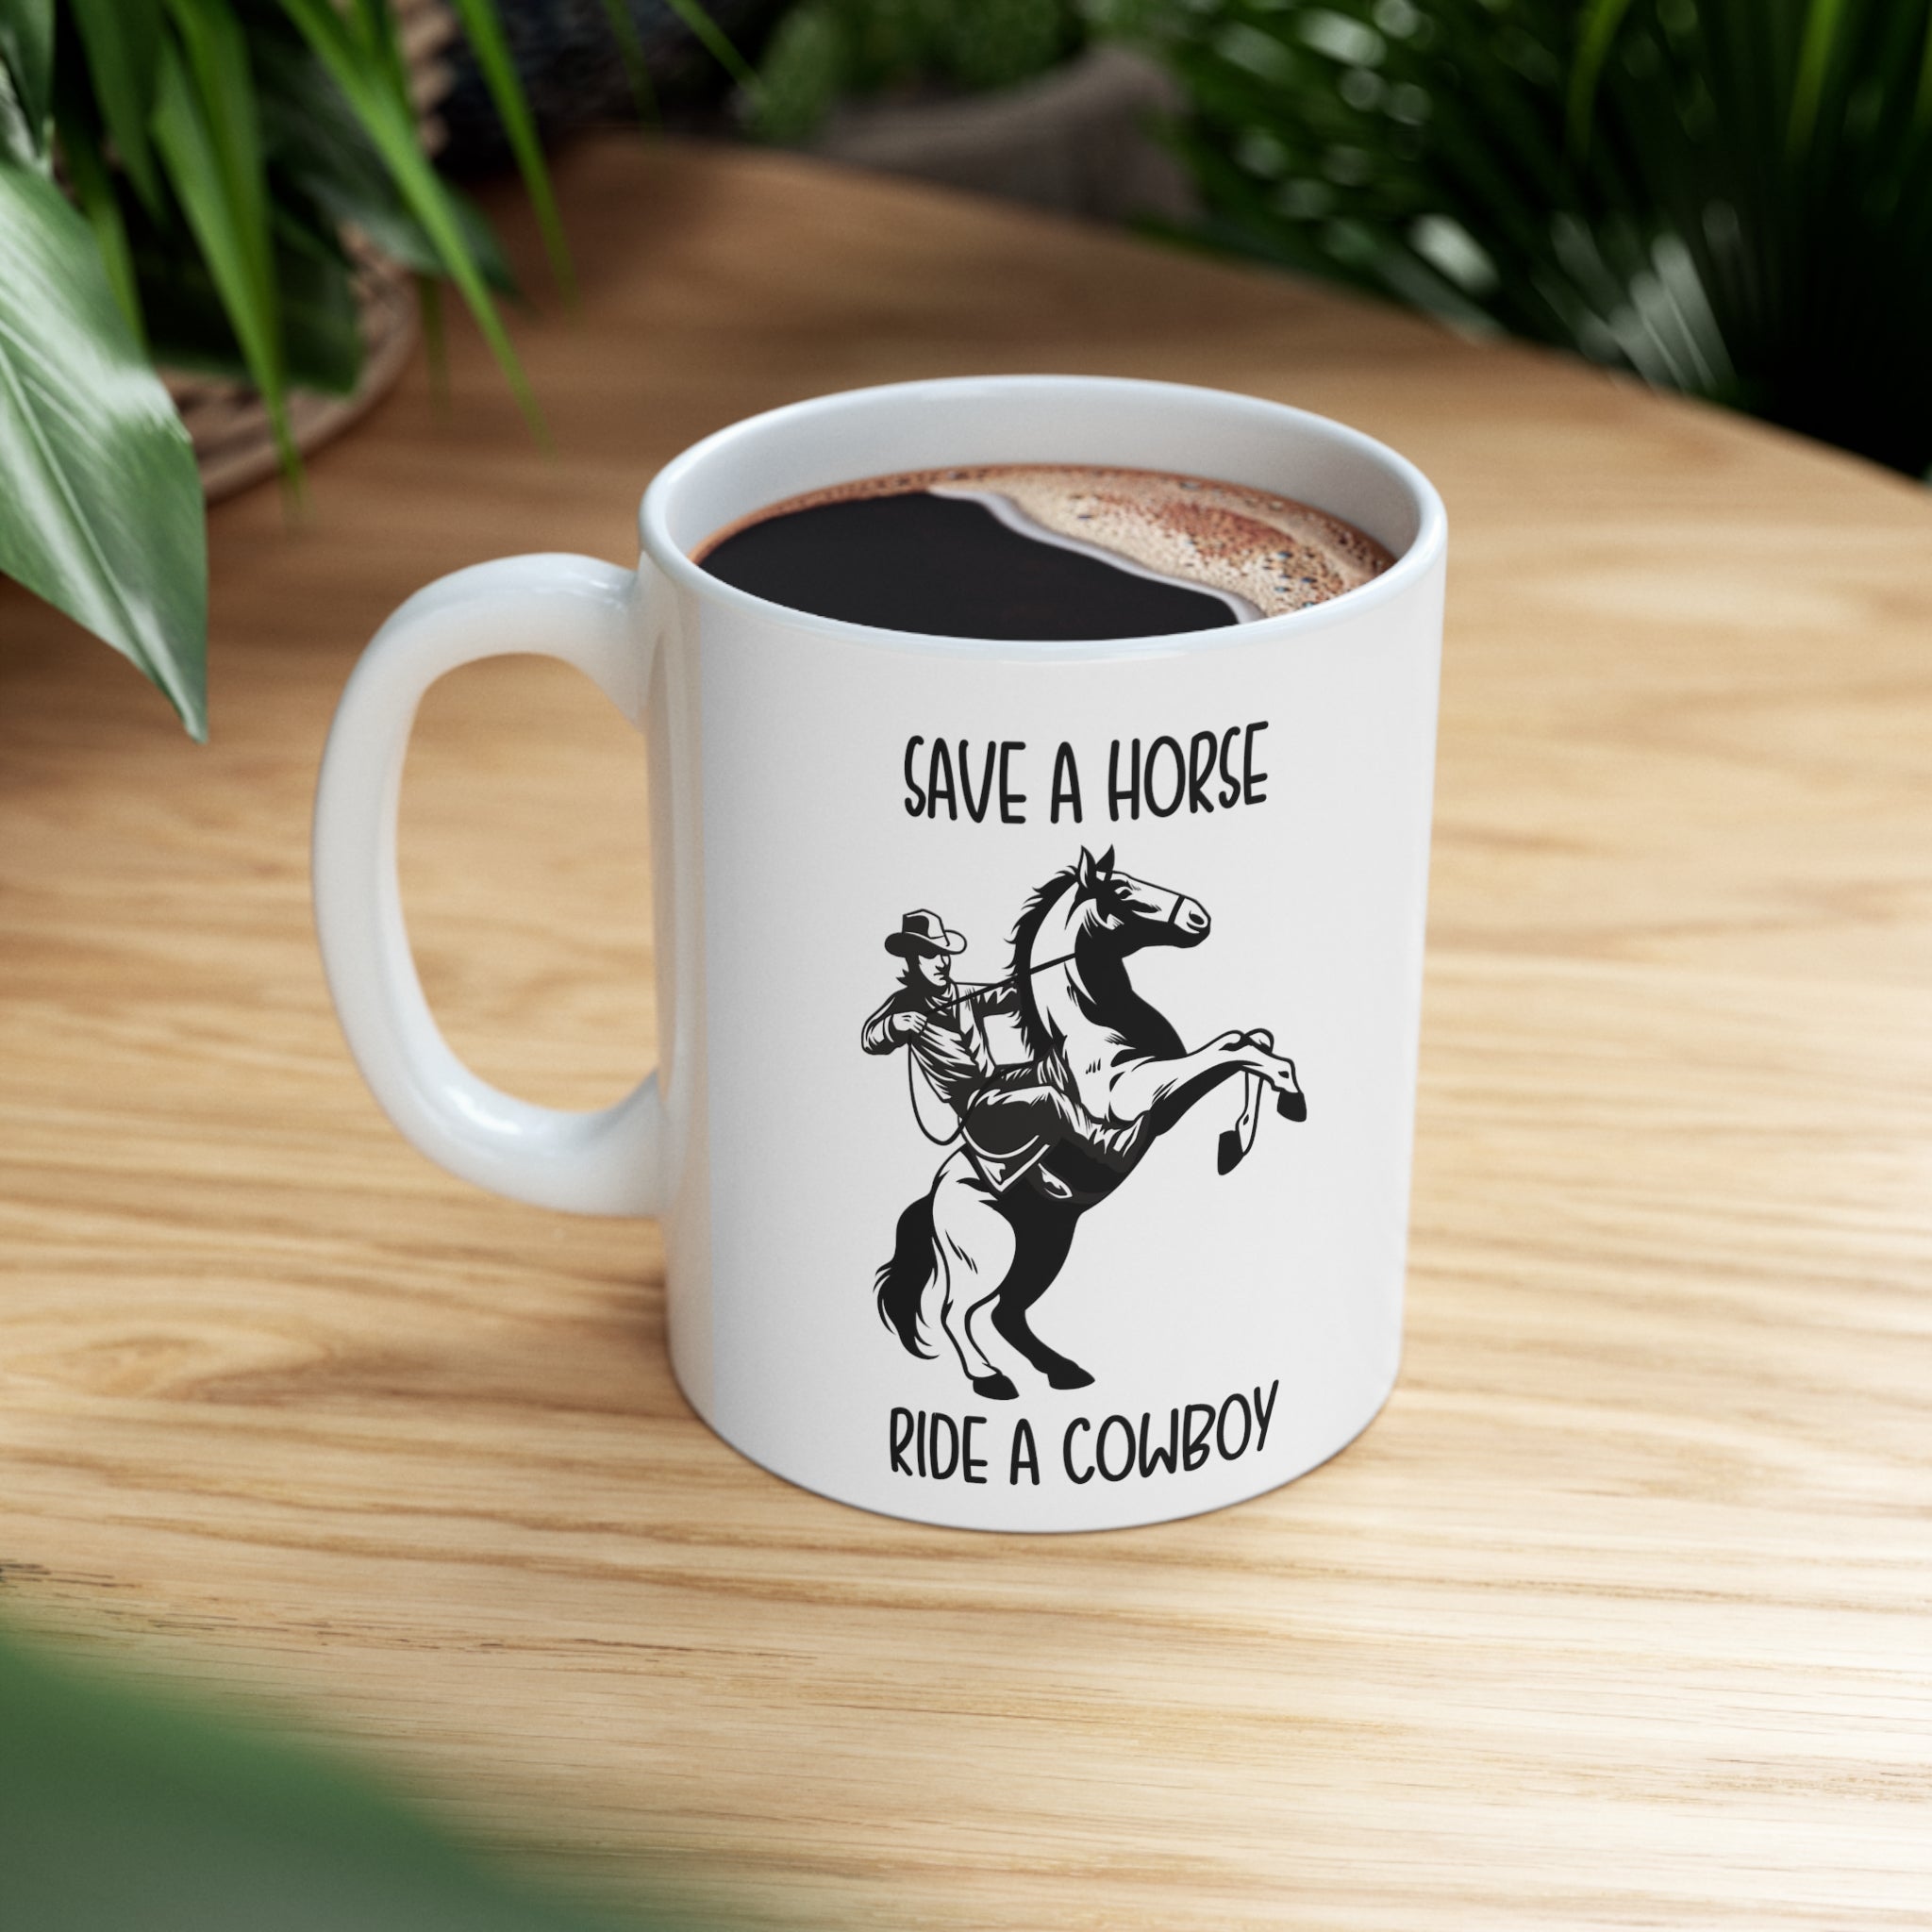 Save A Horse Ride A Cowboy Ceramic Mug 11 ounce Coffee Mug Tea Cup Gift for Cowboy Country Boy